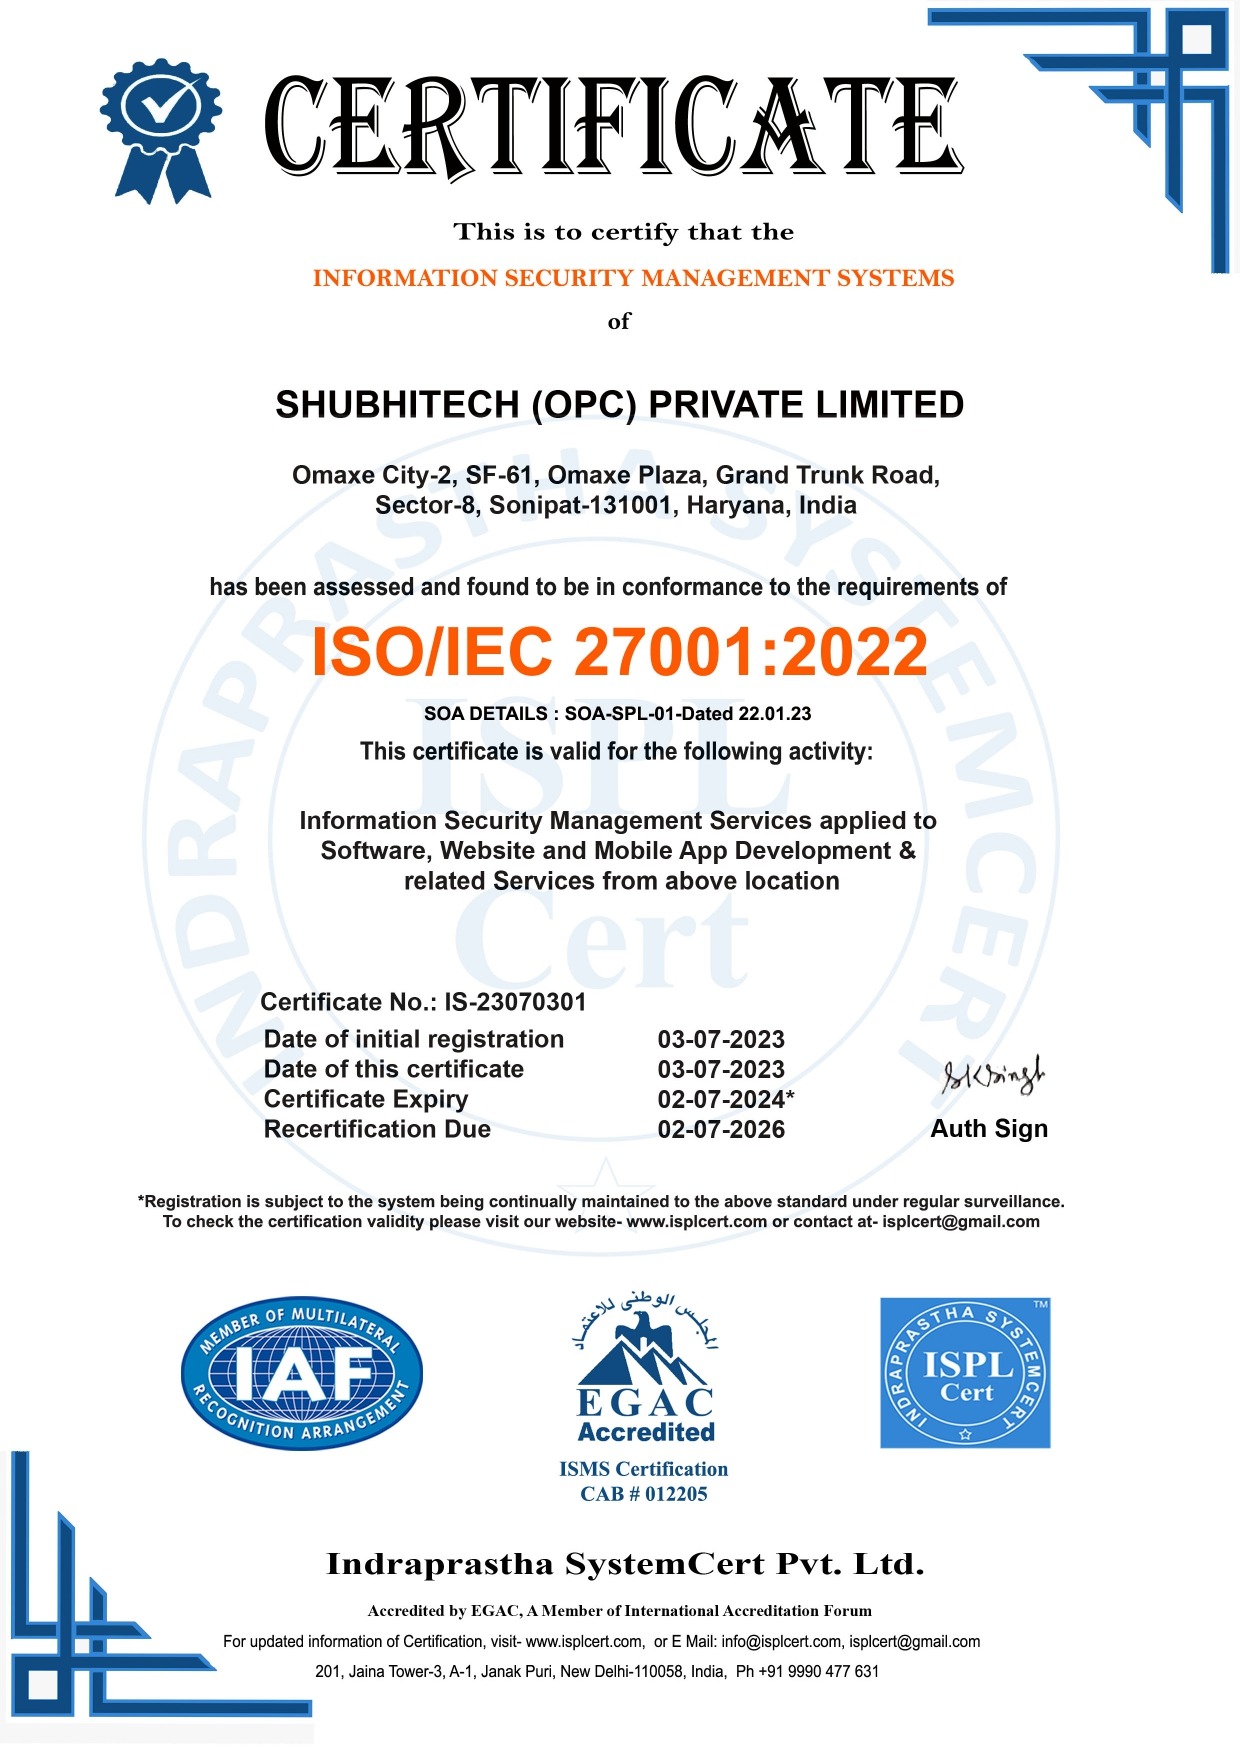 ShubhiTech ISO 27001:2022 certificate